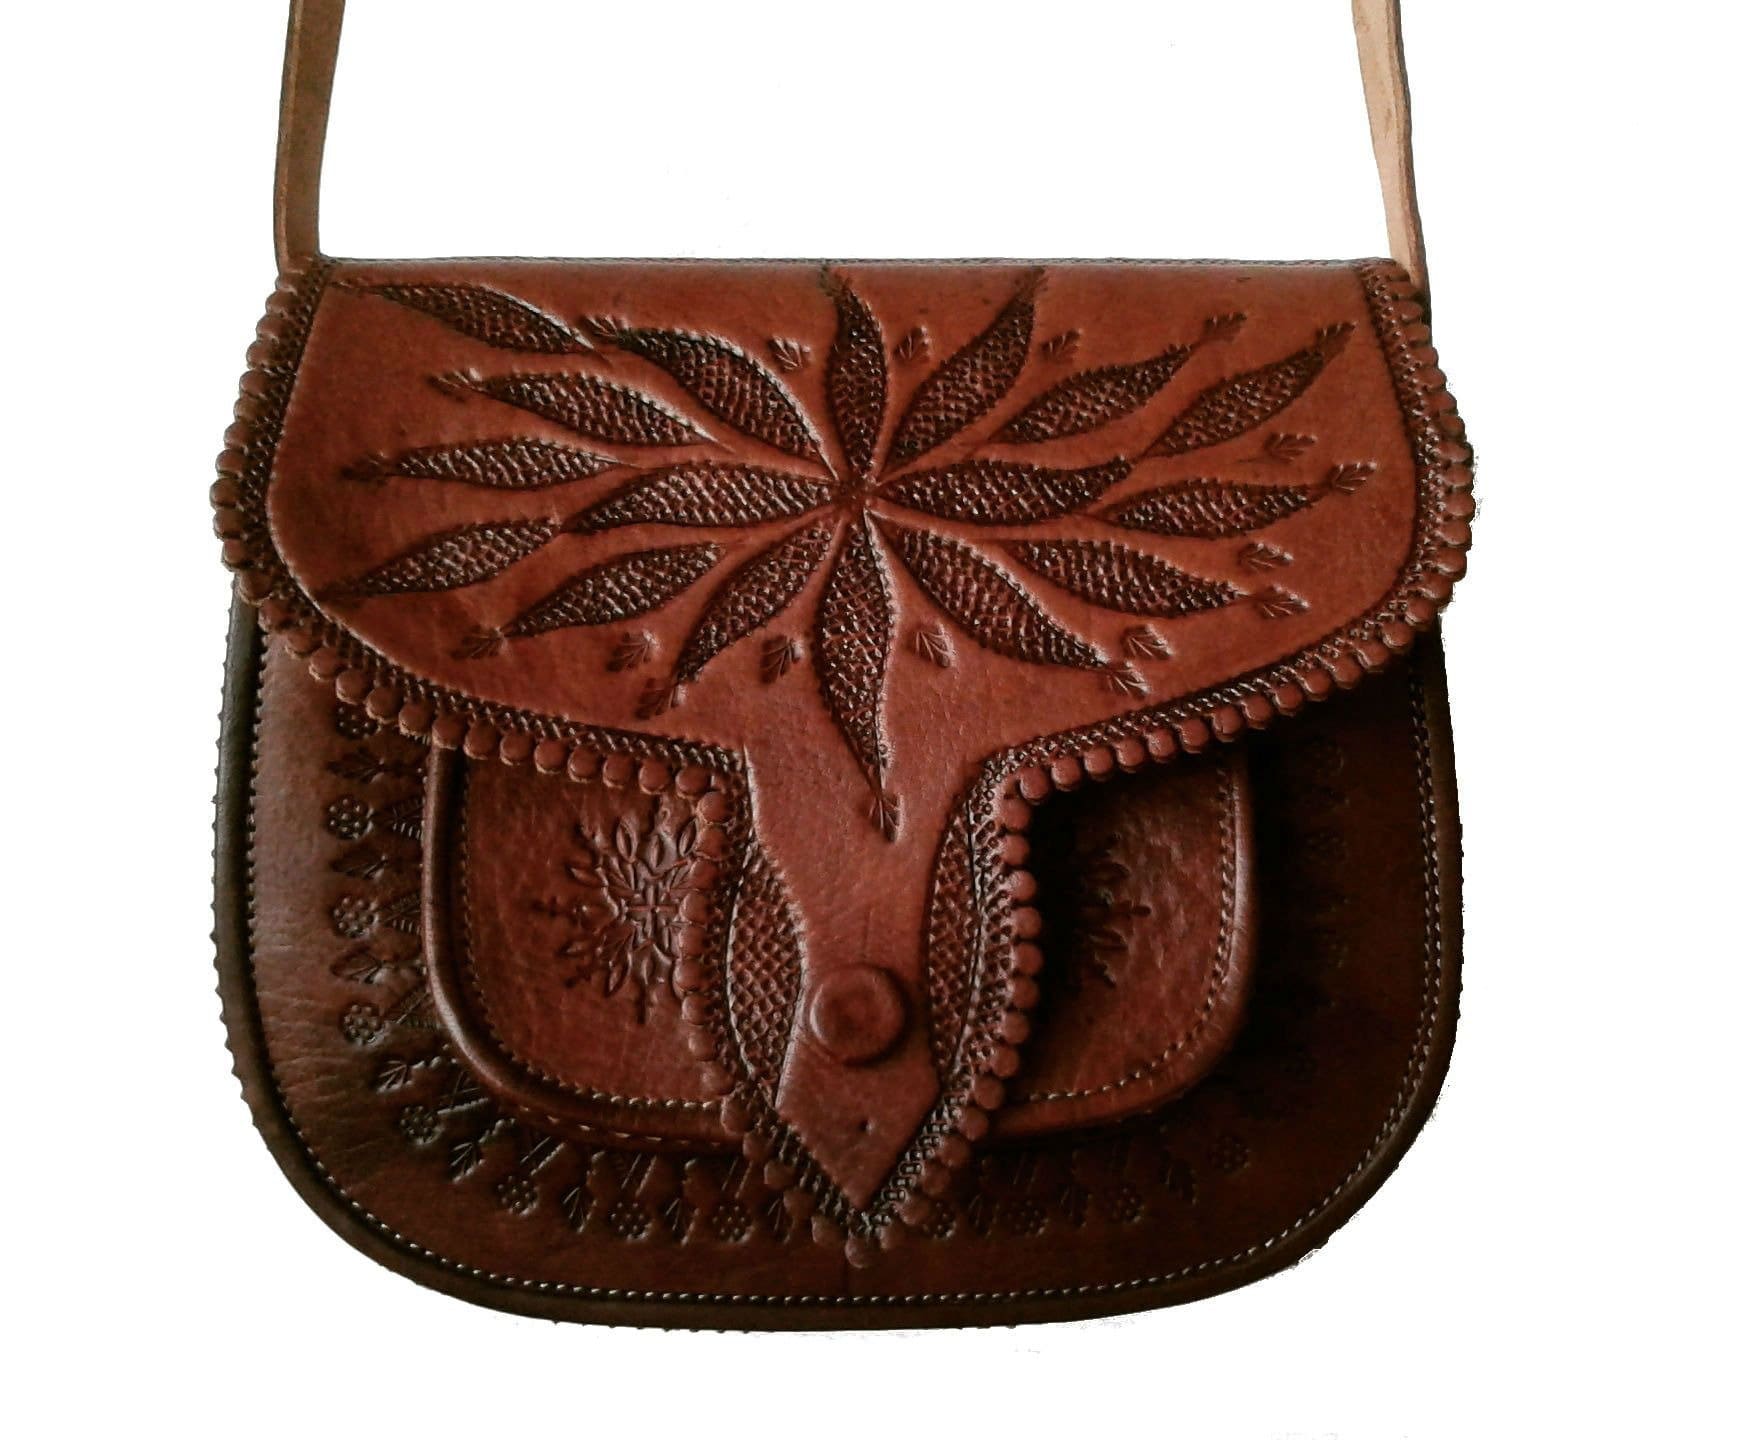 LSSAN Embroidered Leather Handbag